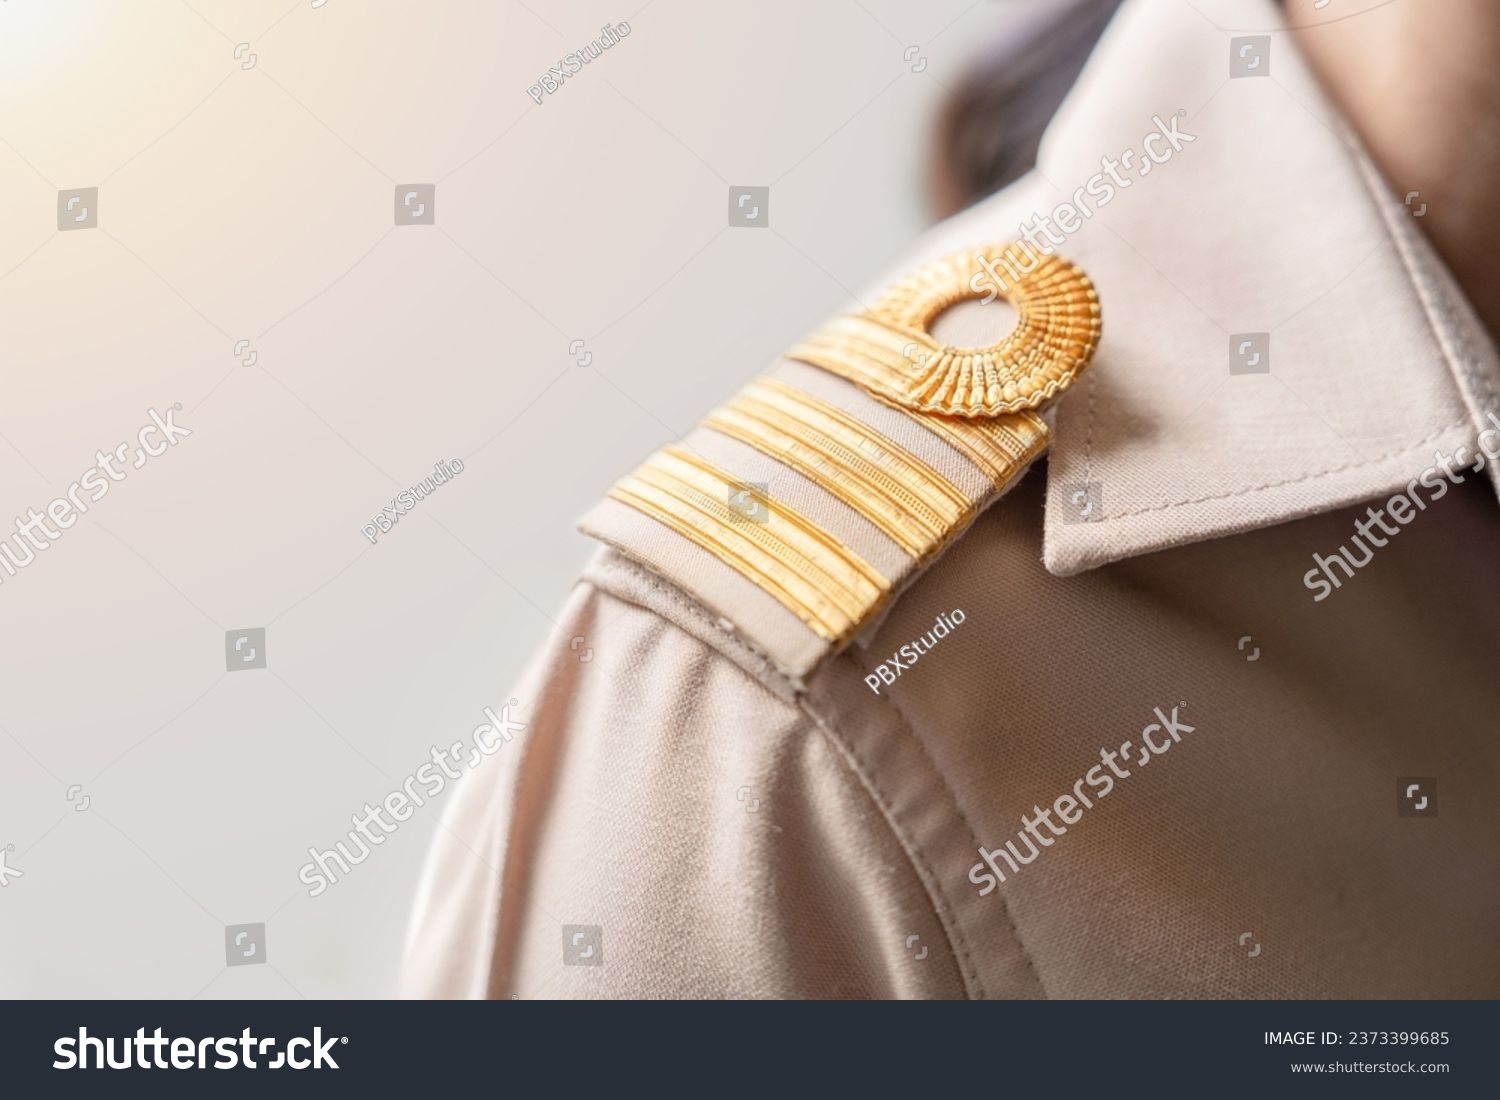 Photo of a brown uniform with a gold stripe on the shoulder, Thai civil servant uniform. #2373399685